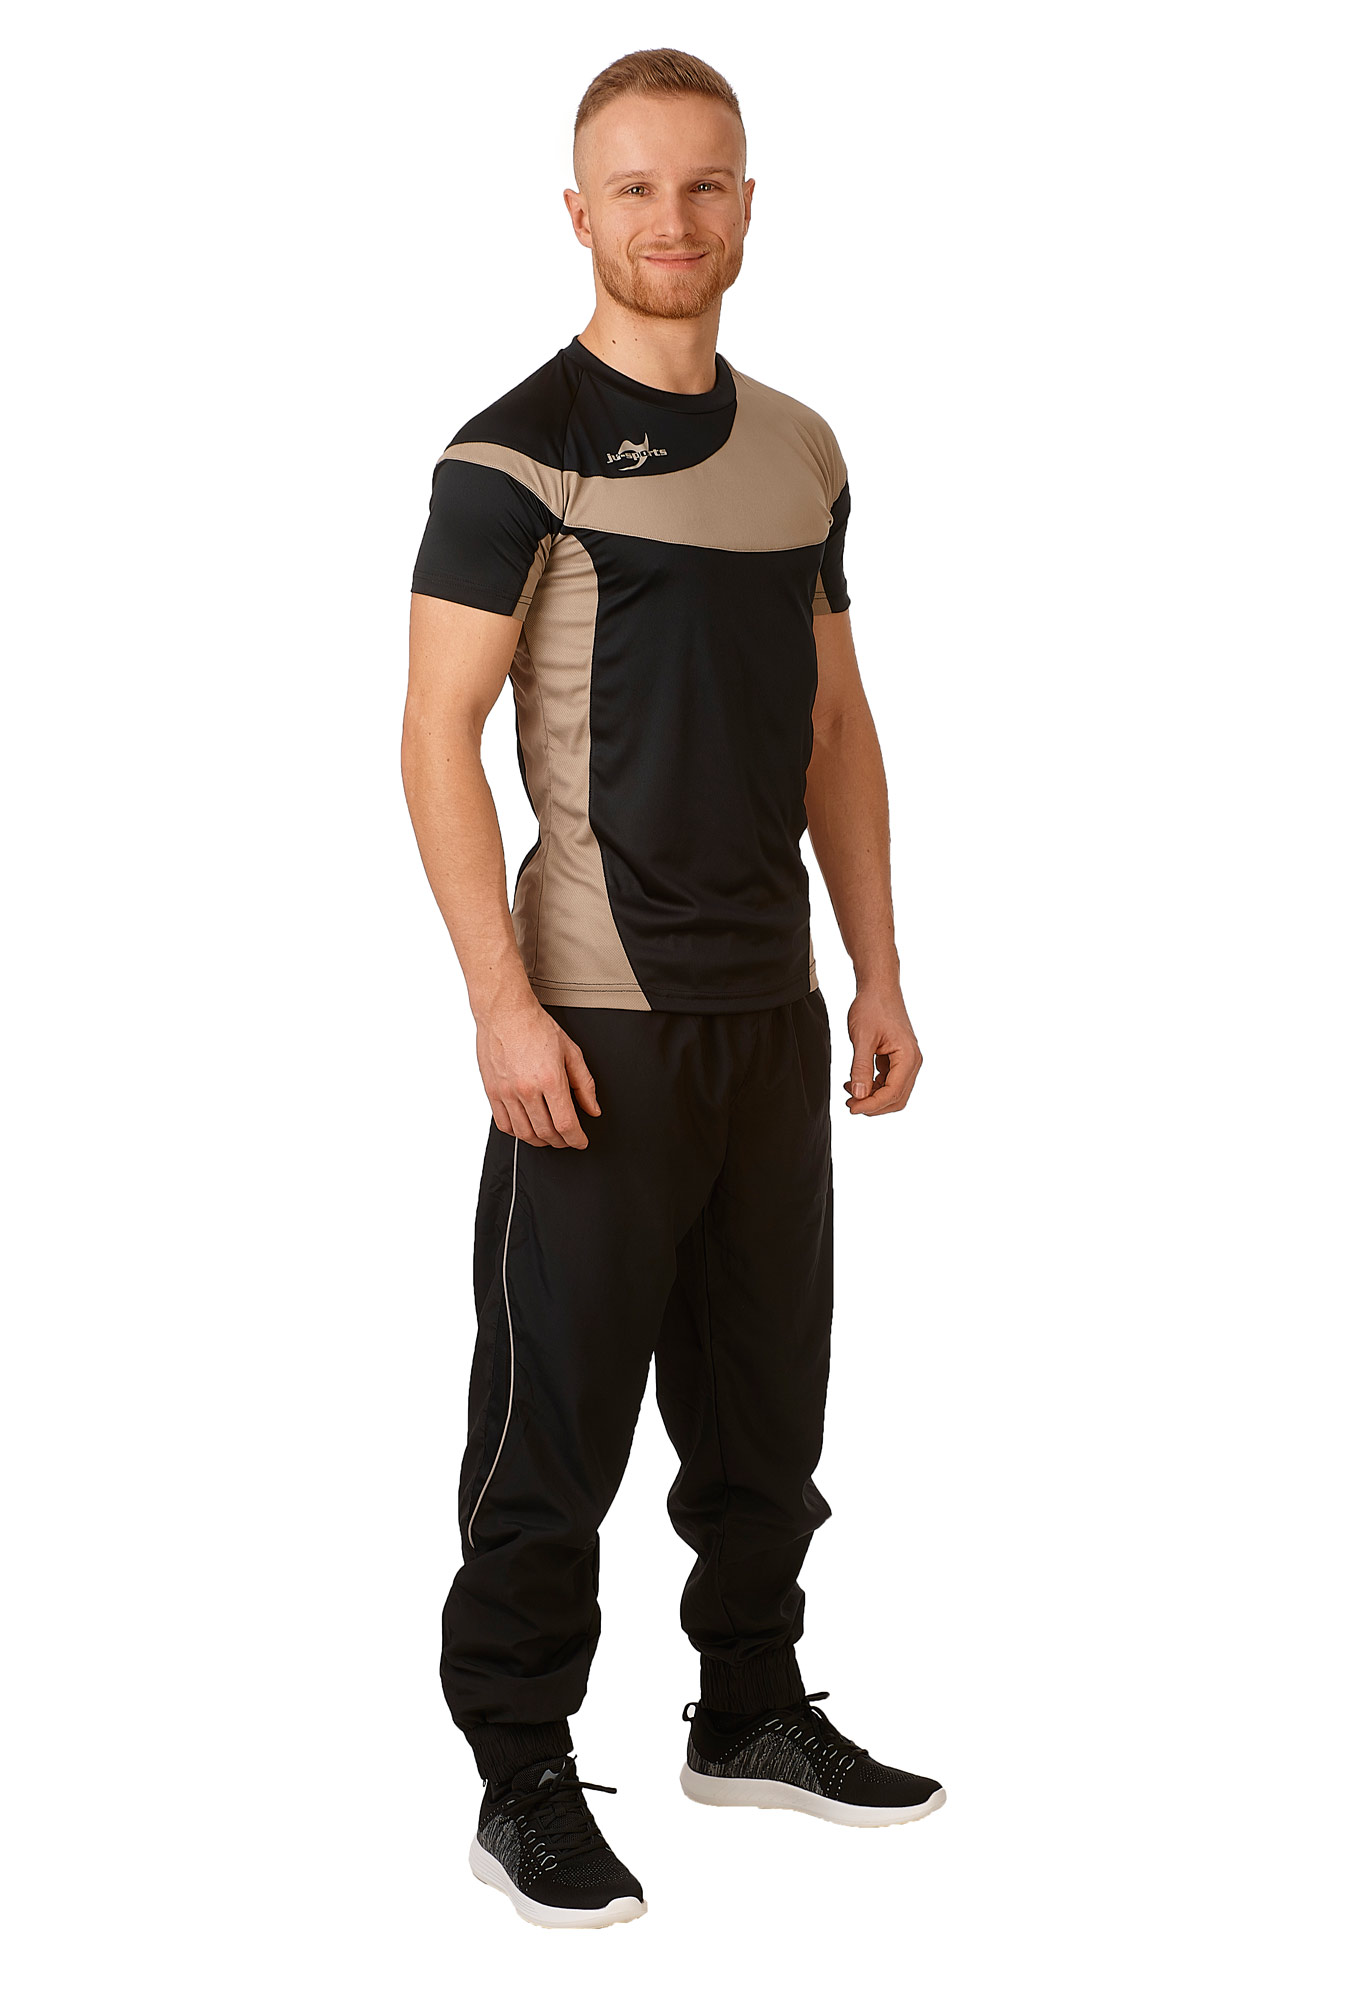 Ju-Sports Teamwear Element C1 Hose schwarz Sporthose Team Wear Trainingshose 